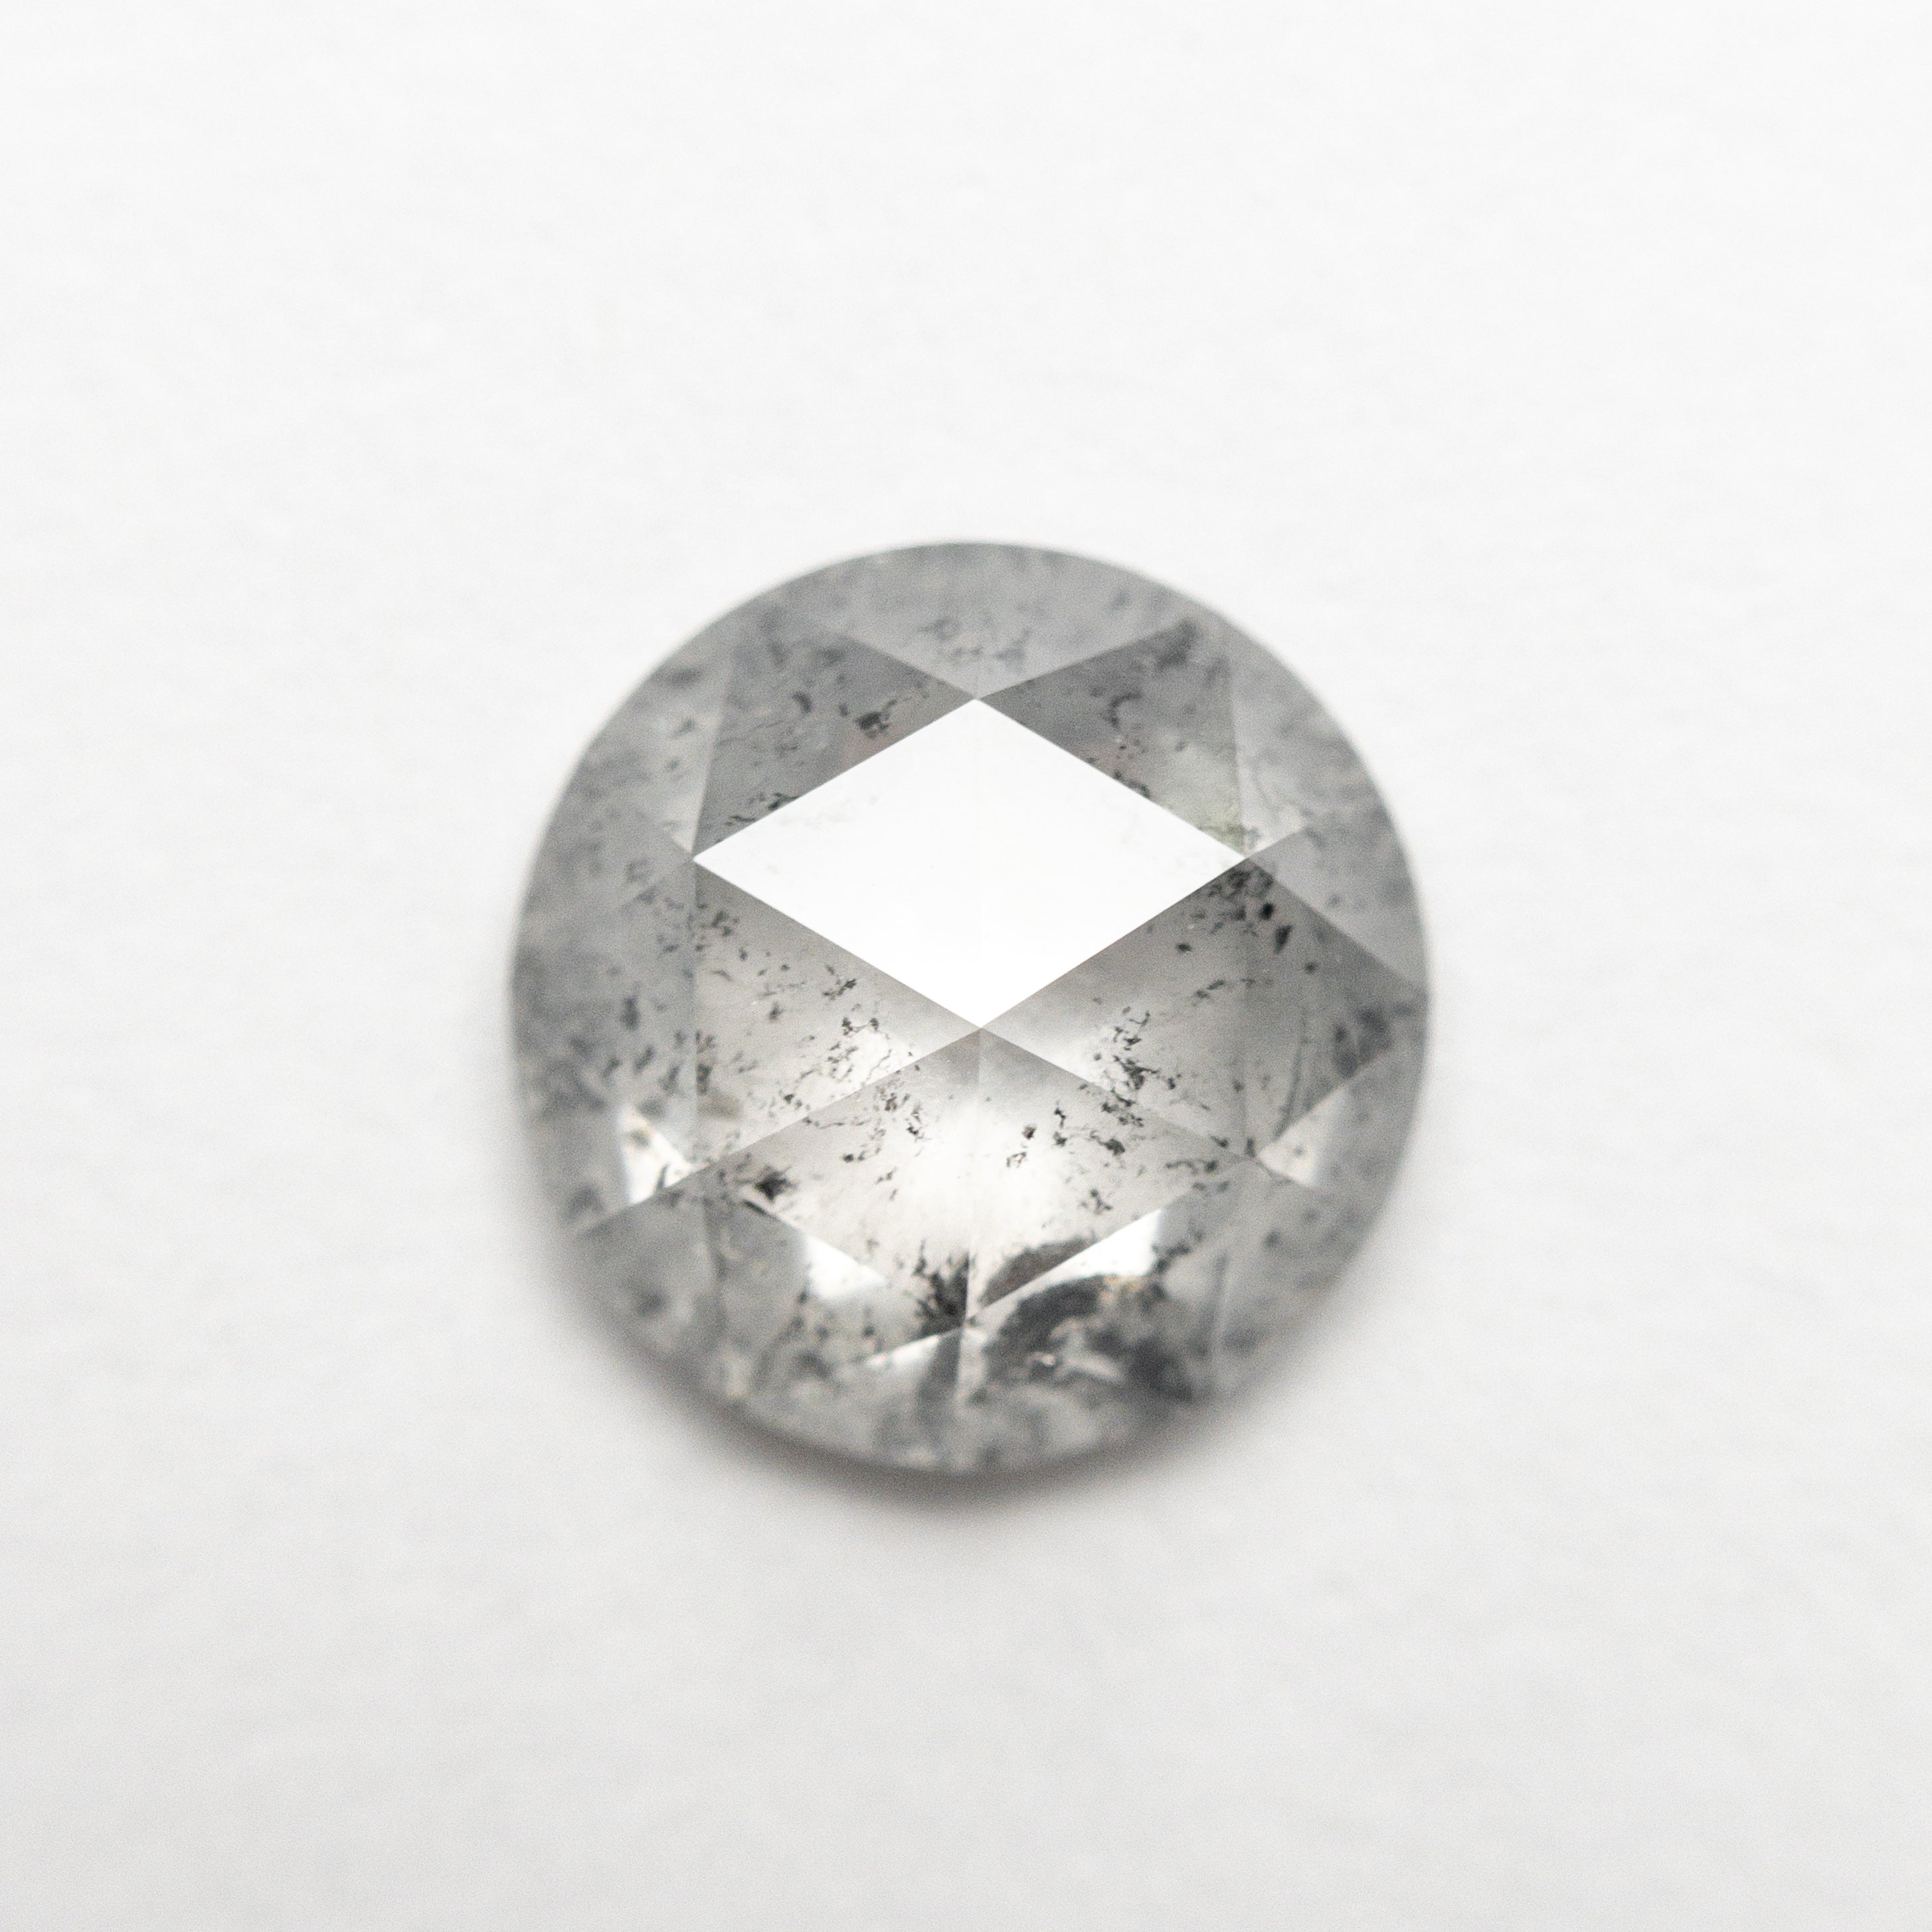 12th HOUSE loose gemstone 1.63ct Round Rose cut diamond